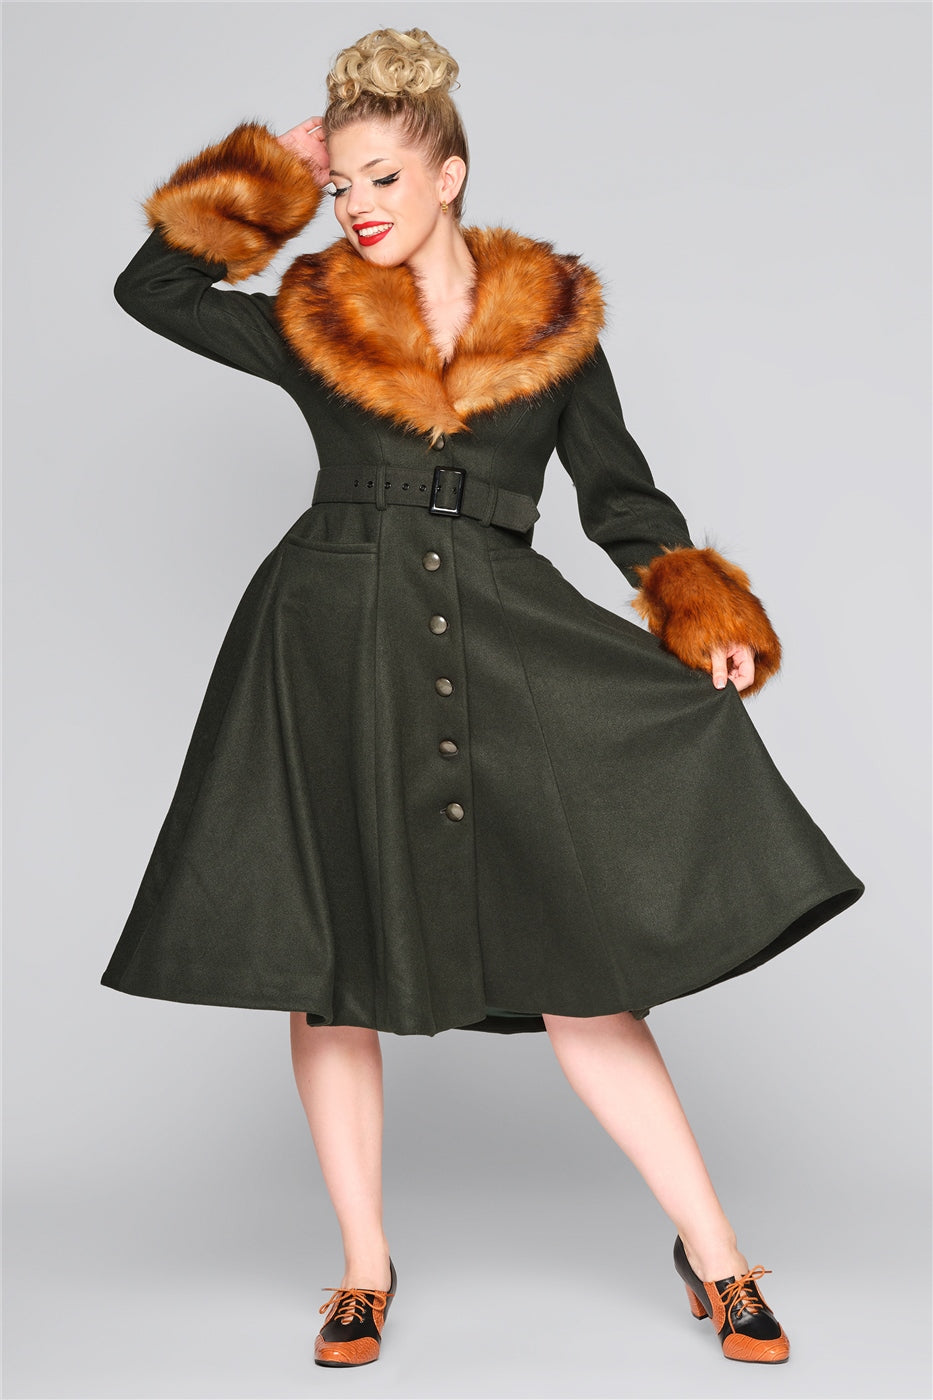 Elegant woman dressed in a vintage dark green swing coat with a fur trim